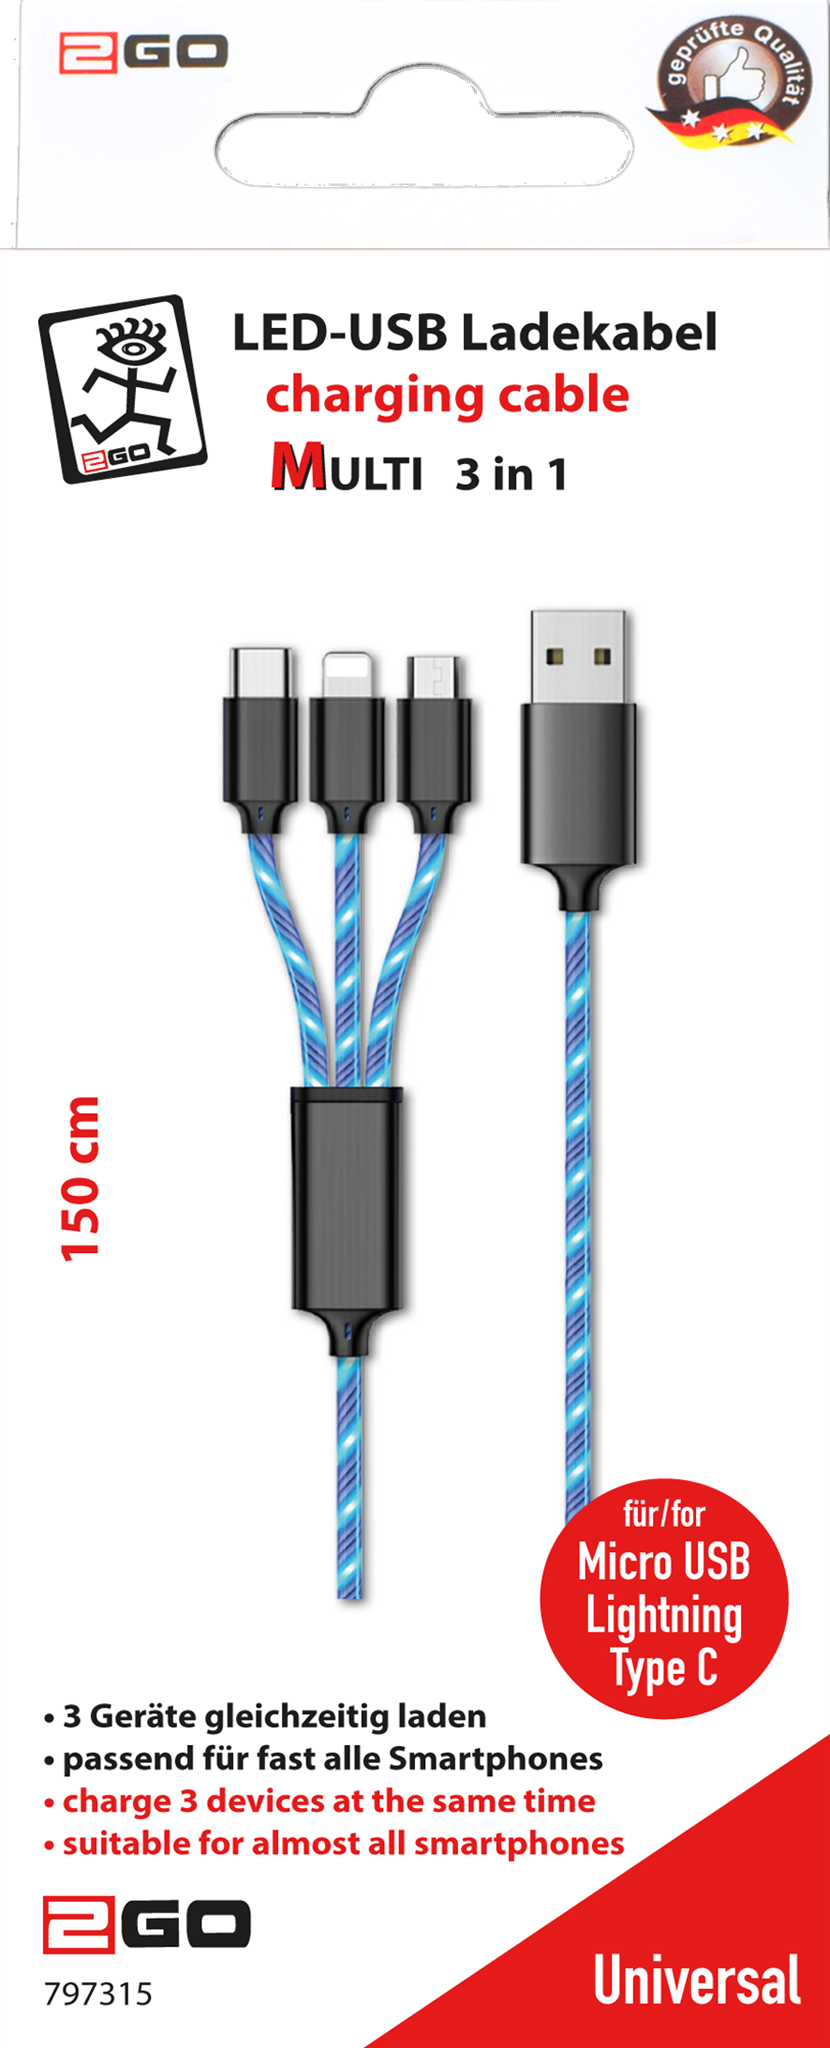 2GO Mobile.net - B2C -. 3in1 USB LED Kabel blau 100cm